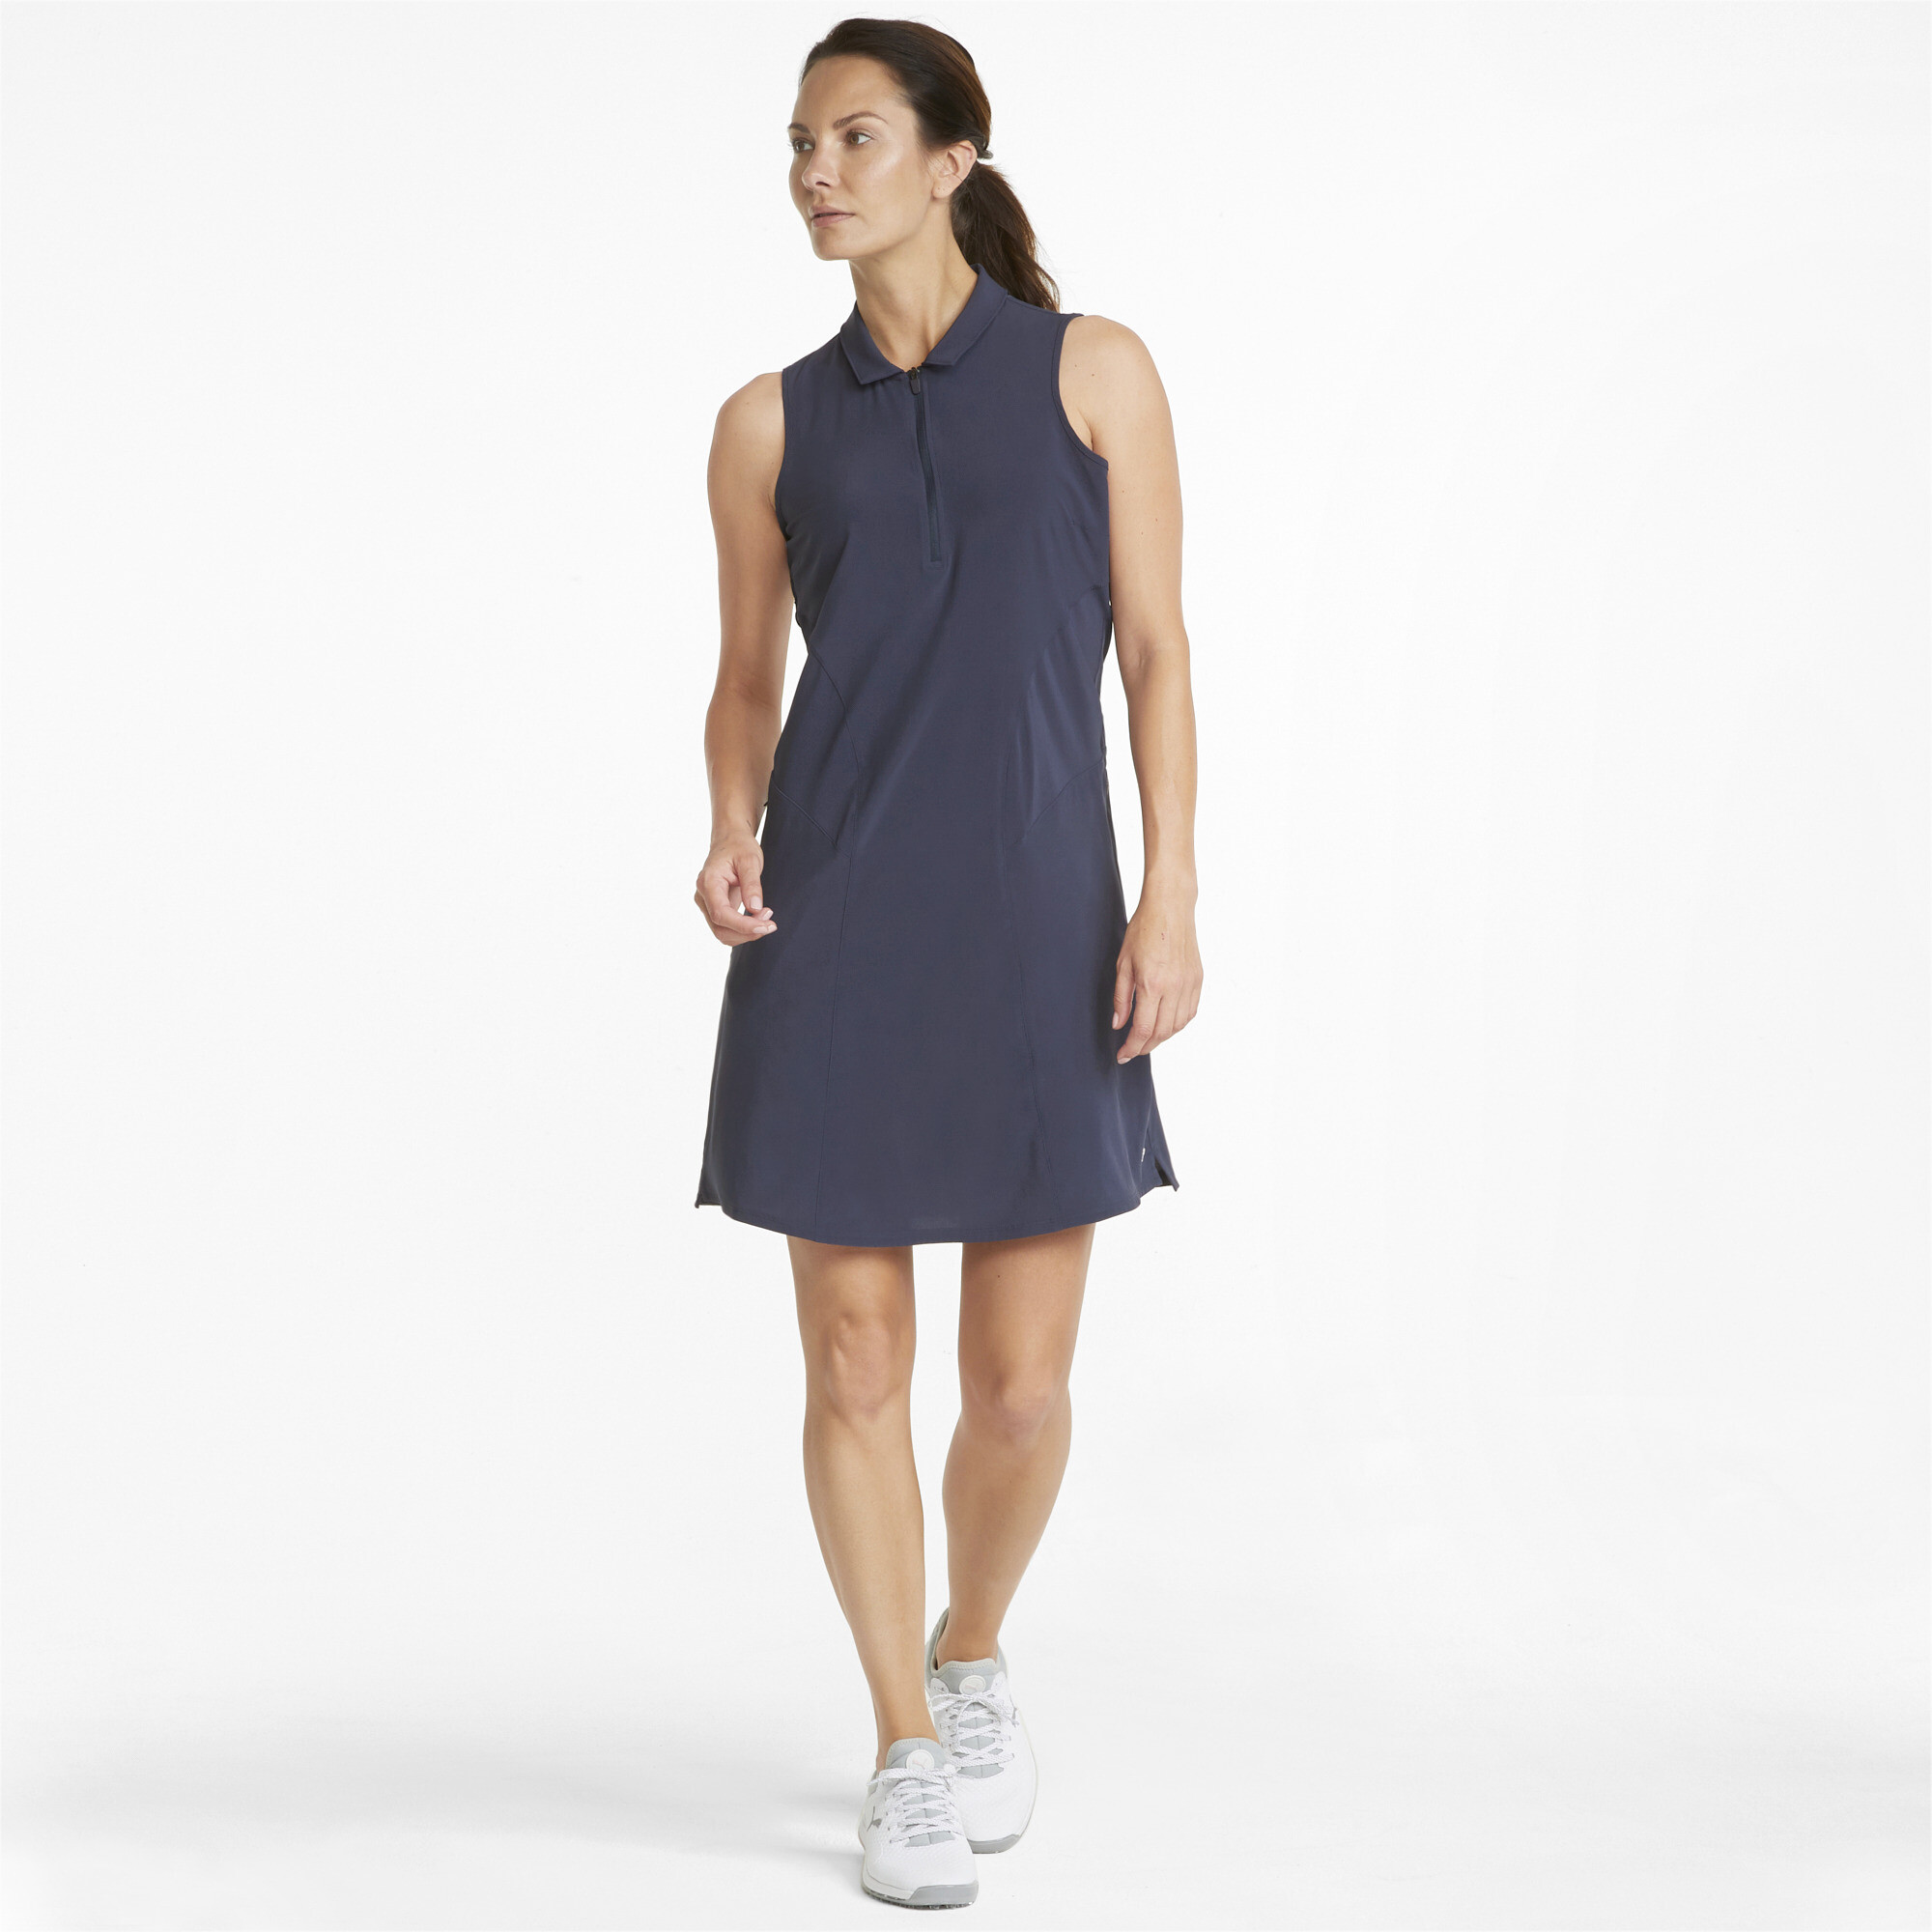 Women's Puma Cruise's Golf Dress, Blue, Size XL, Clothing